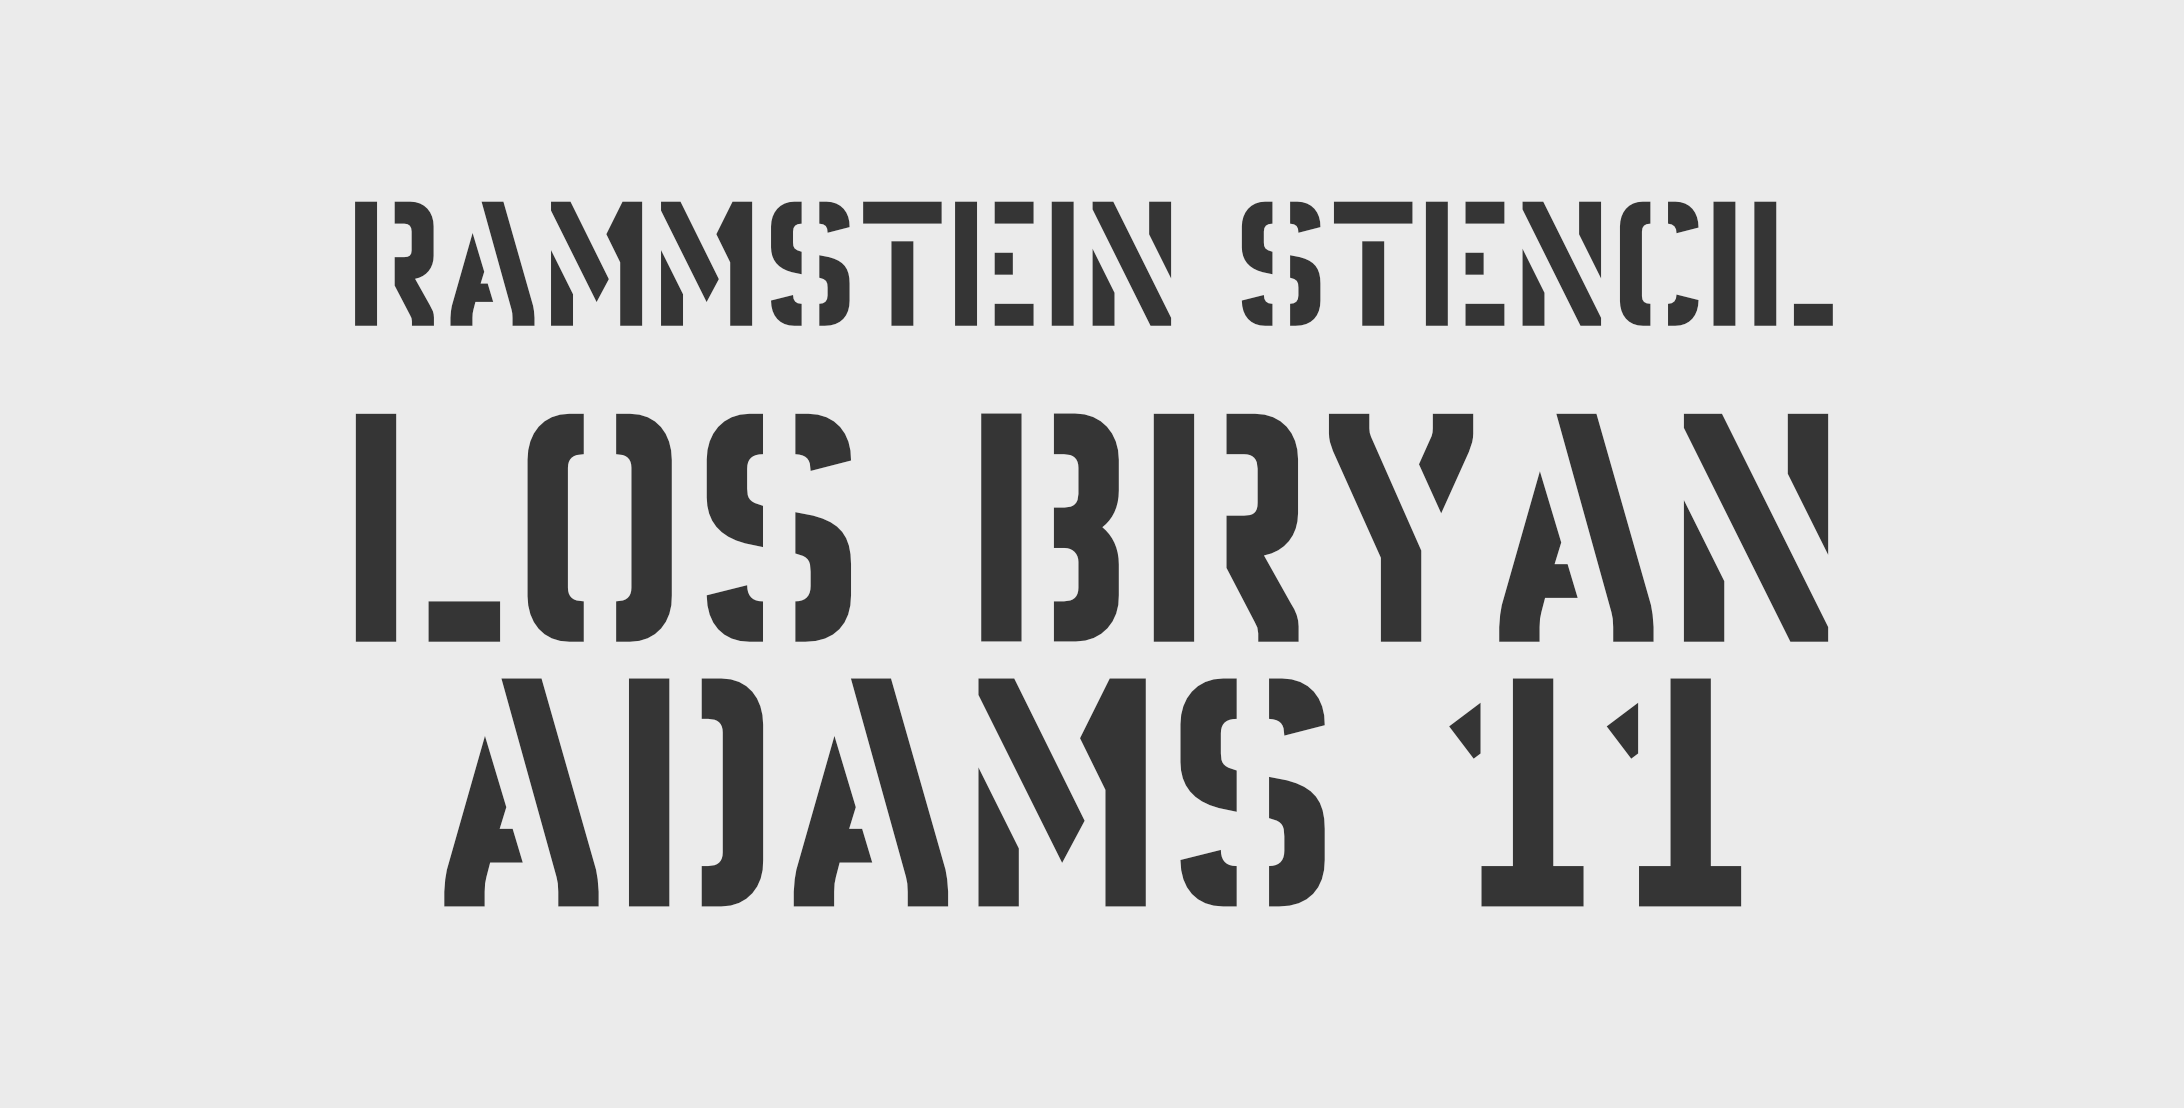 Rammstein / Bryan Adams